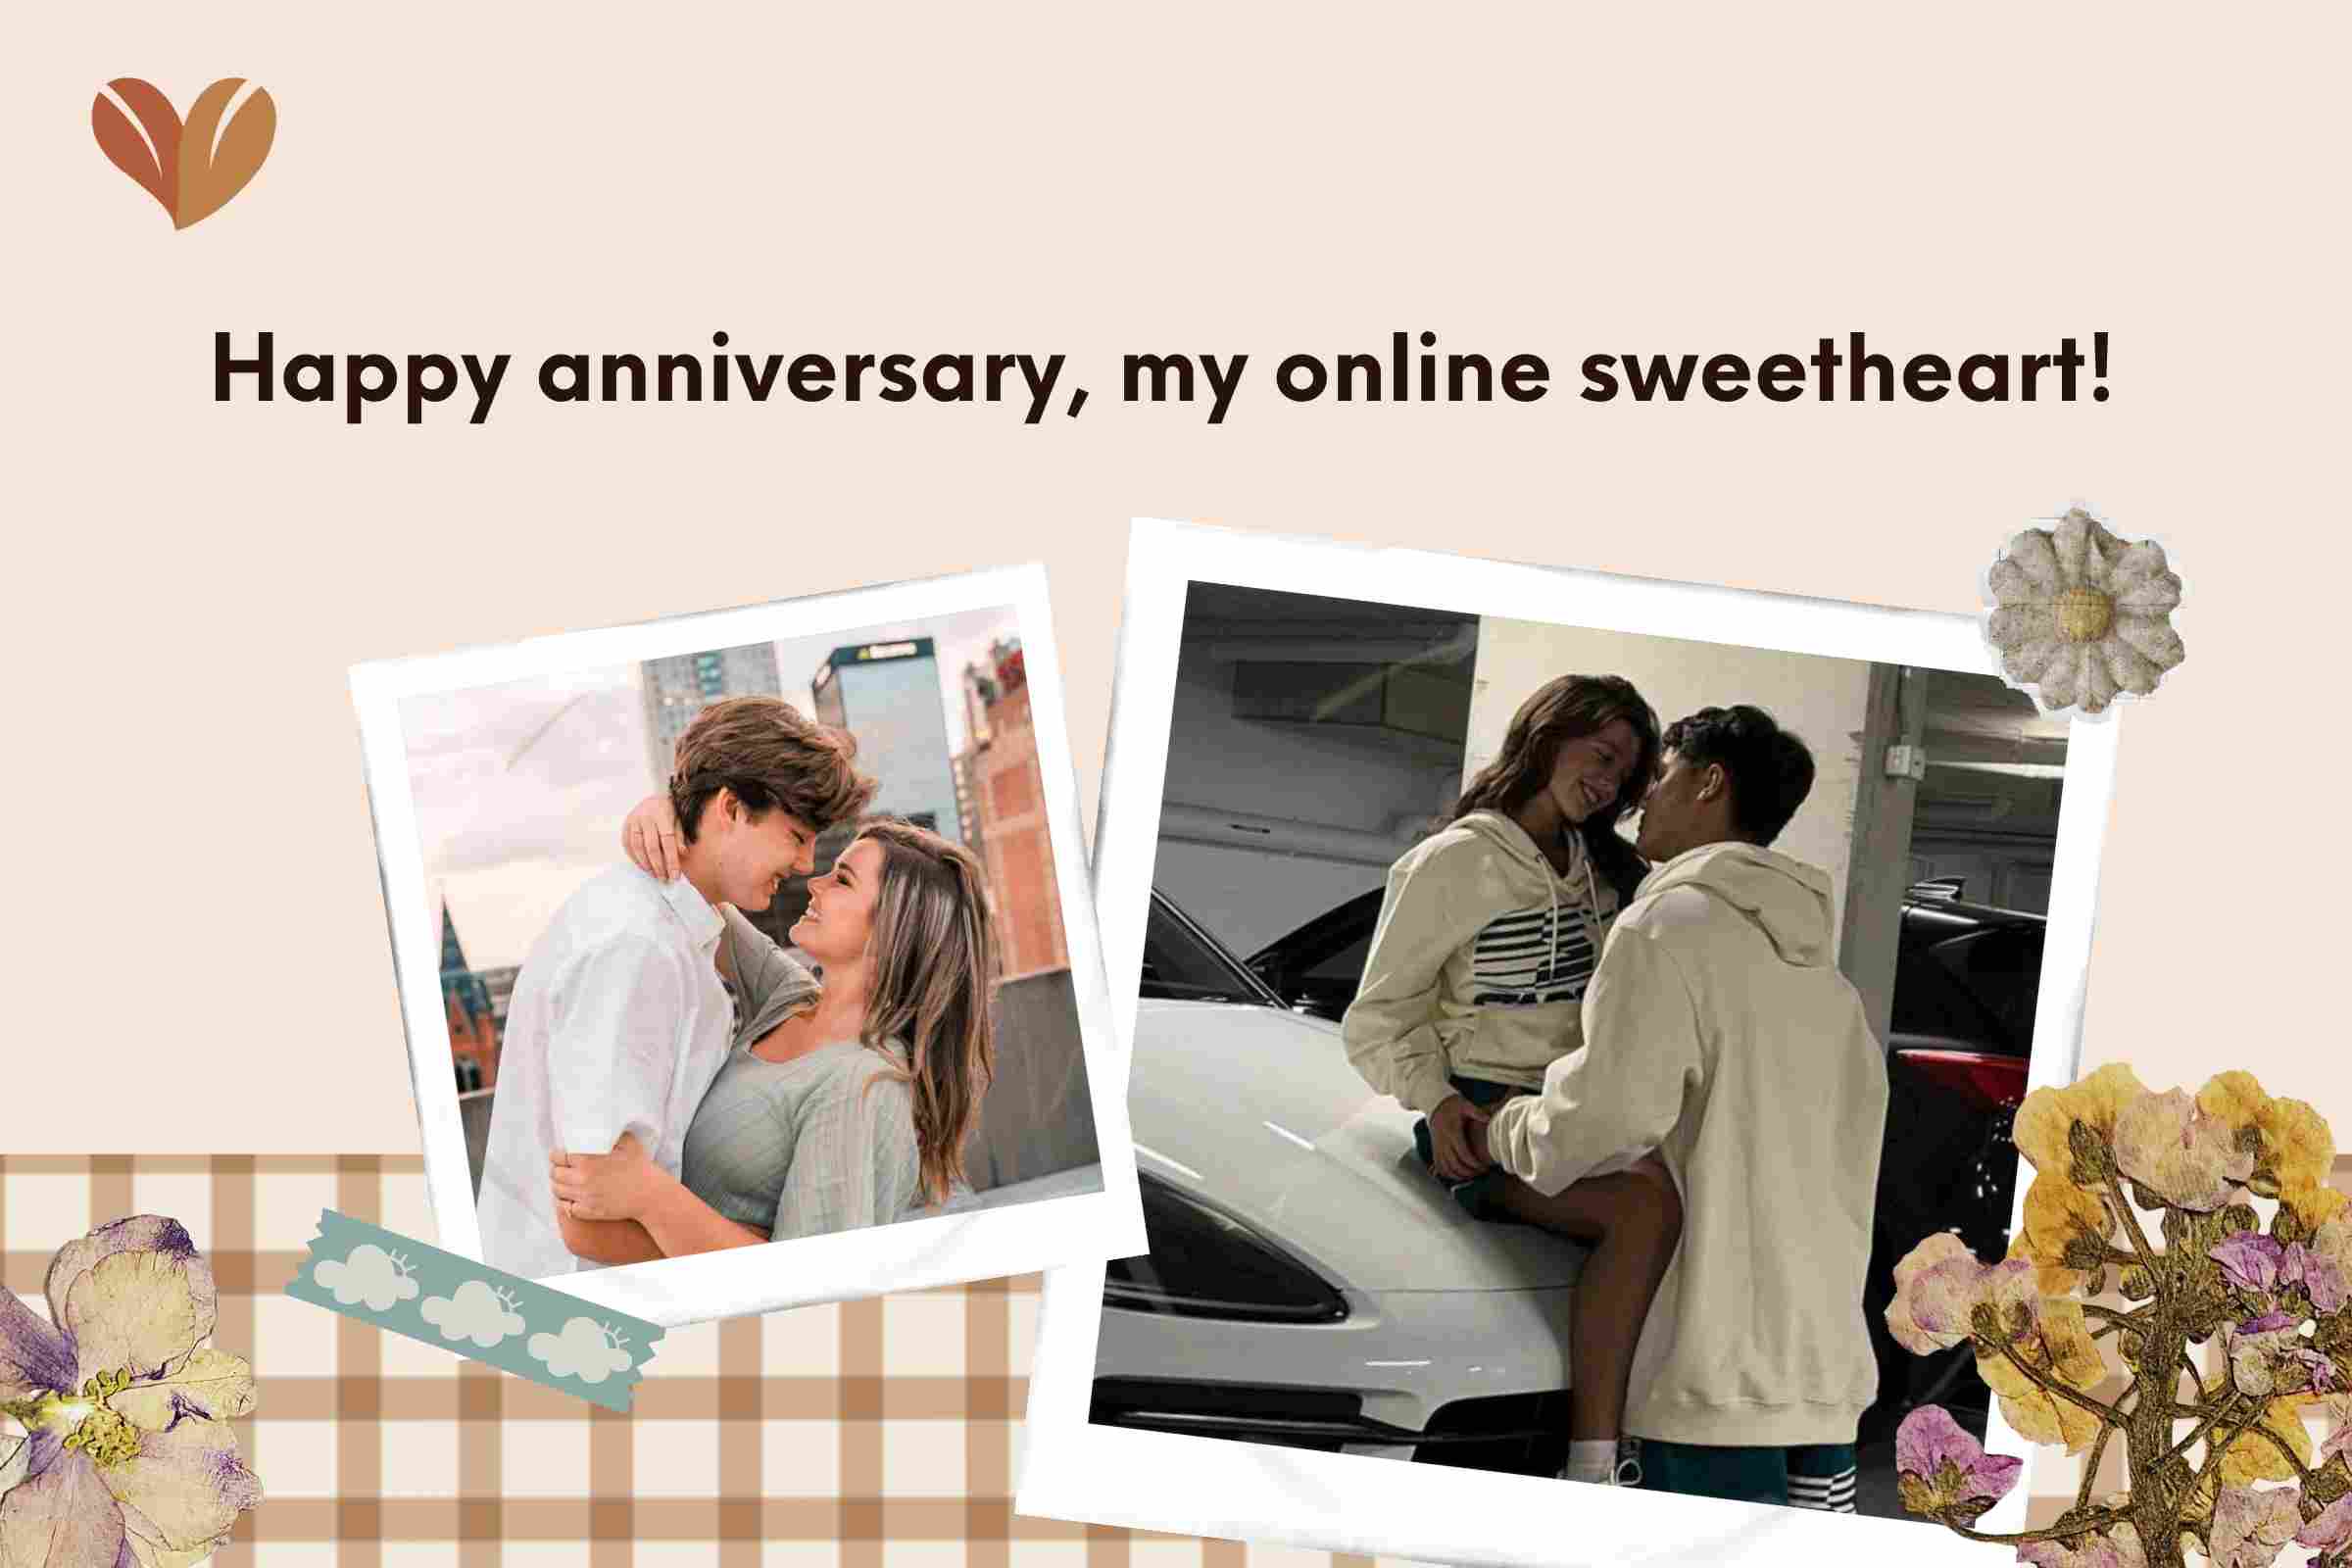  Happy anniversary, my online sweetheart!